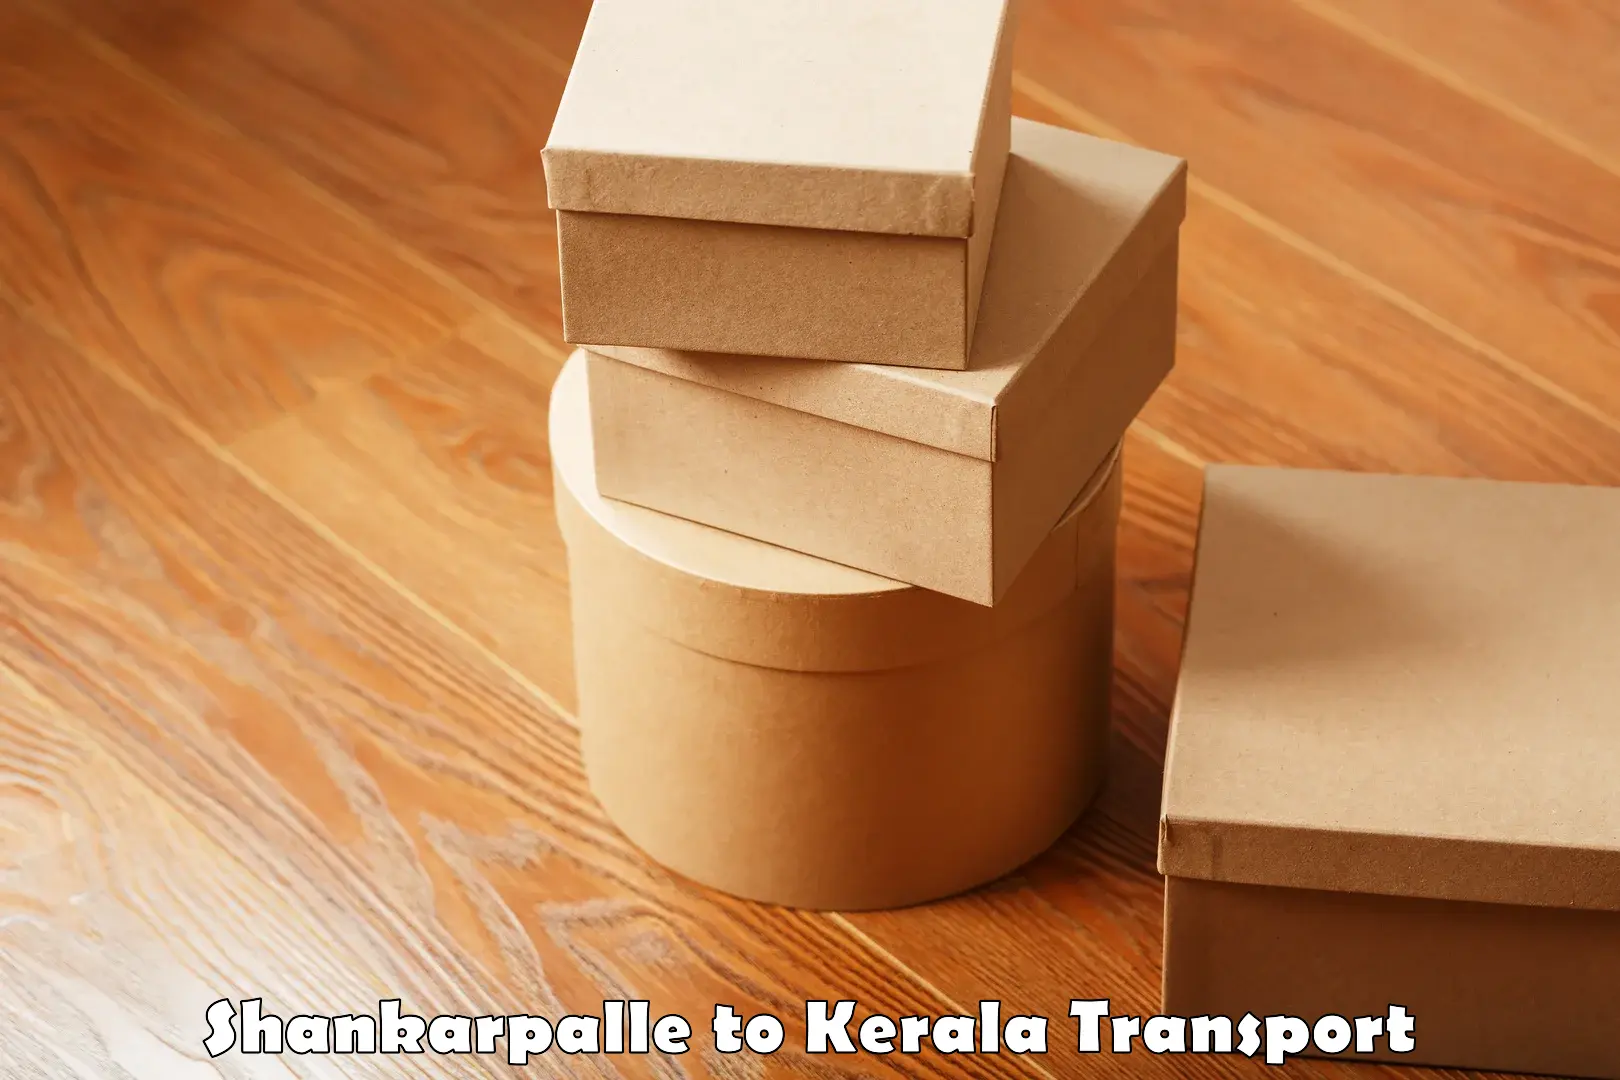 Shipping partner Shankarpalle to Kerala